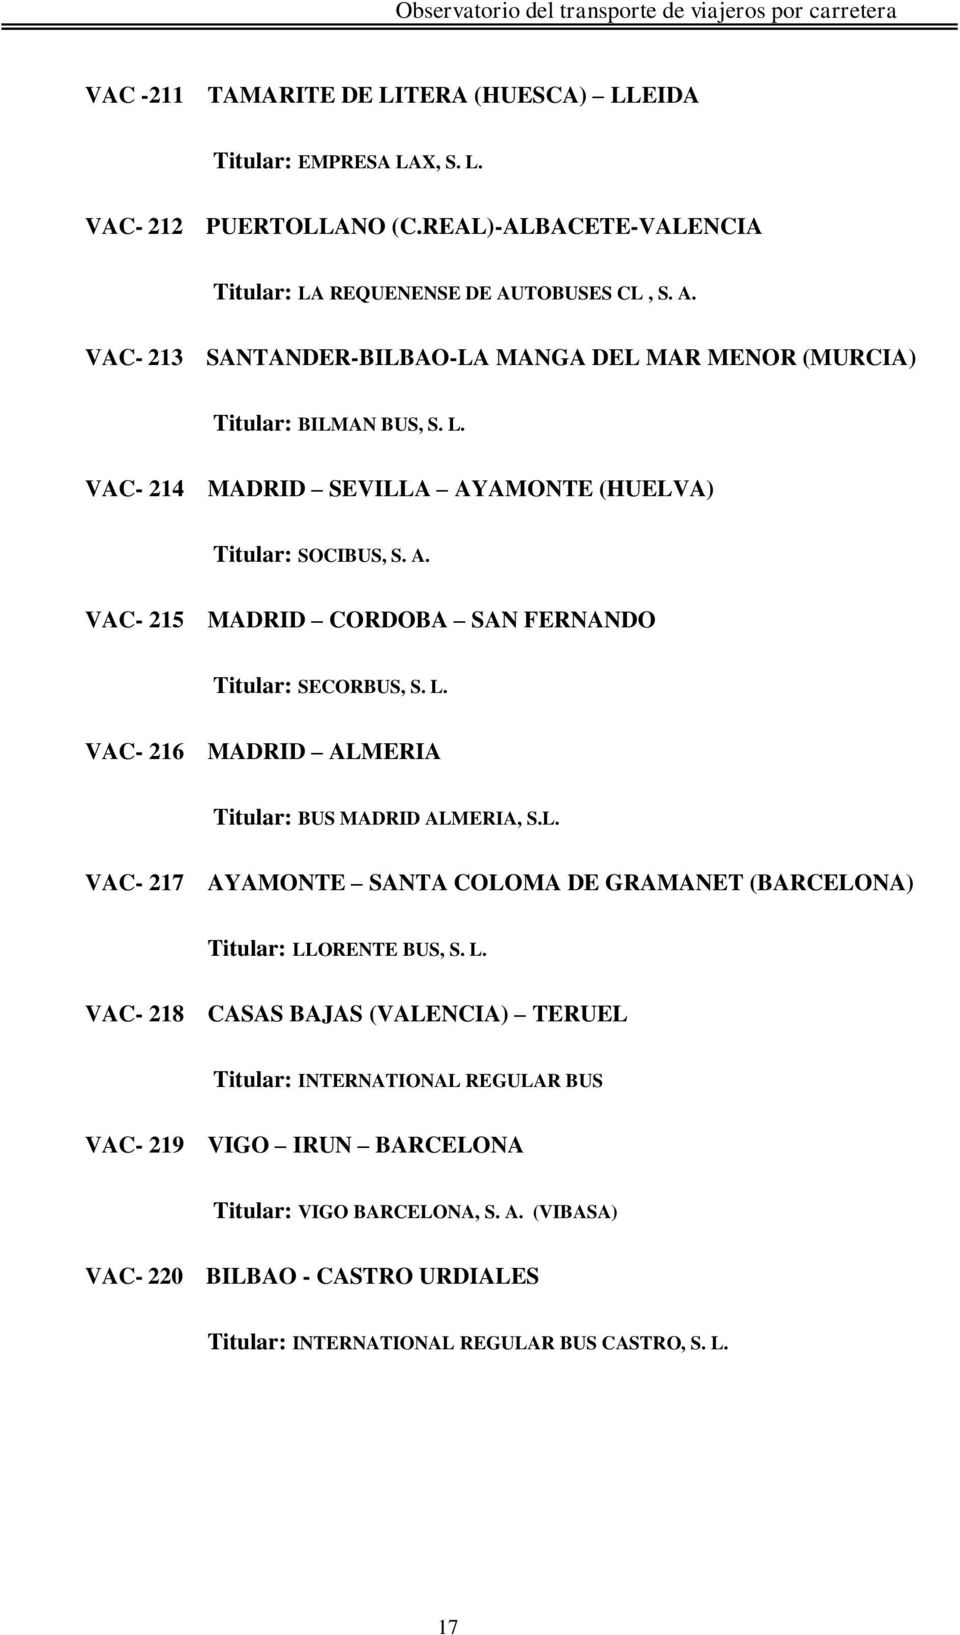 L. VAC- 216 MADRID ALMERIA Titular: BUS MADRID ALMERIA, S.L. VAC- 217 AYAMONTE SANTA COLOMA DE GRAMANET (BARCELONA) Titular: LL